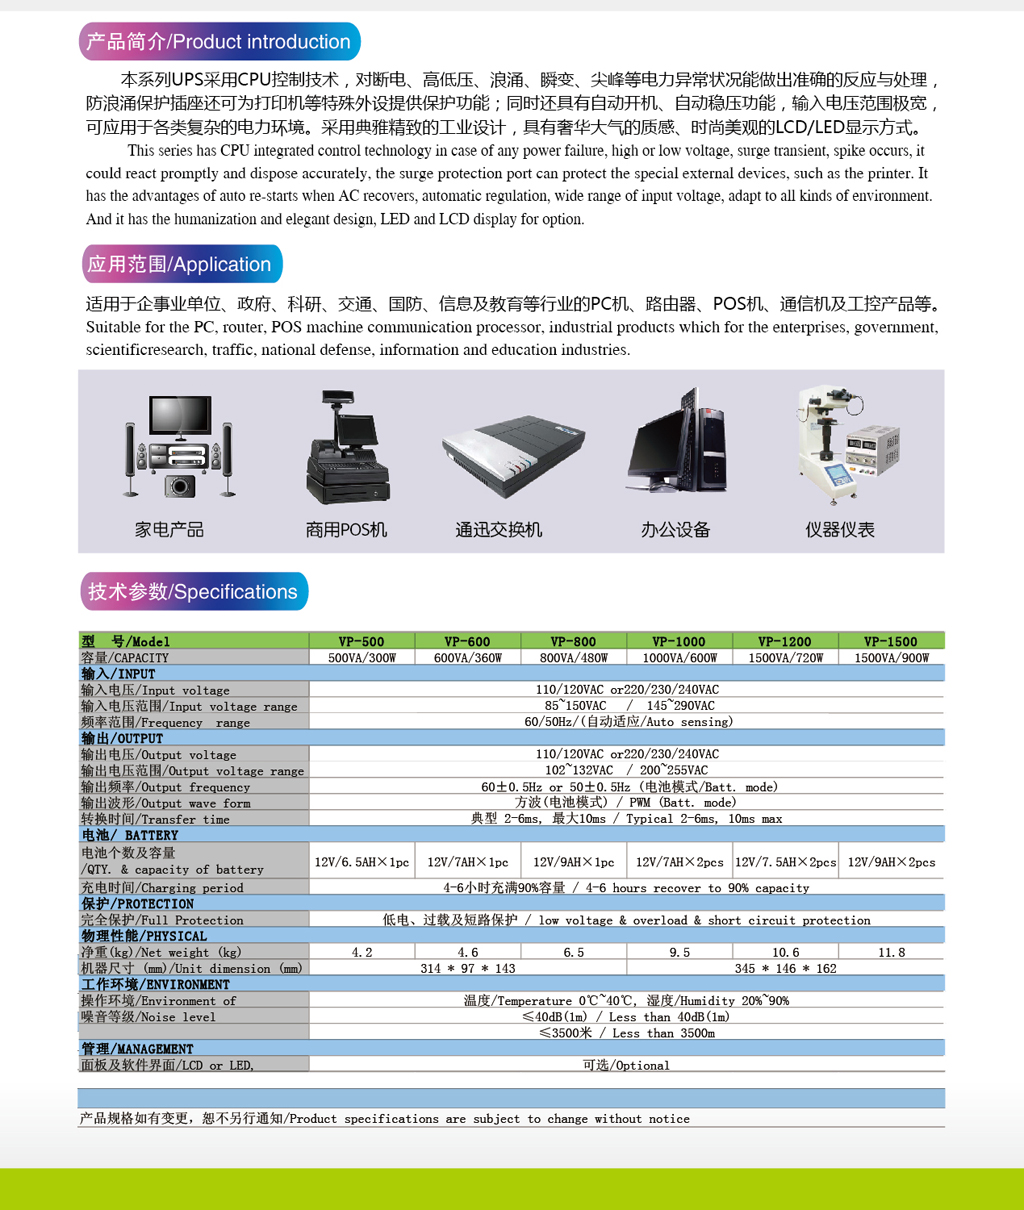 Foshan Unipower Electronic Co., Ltd.